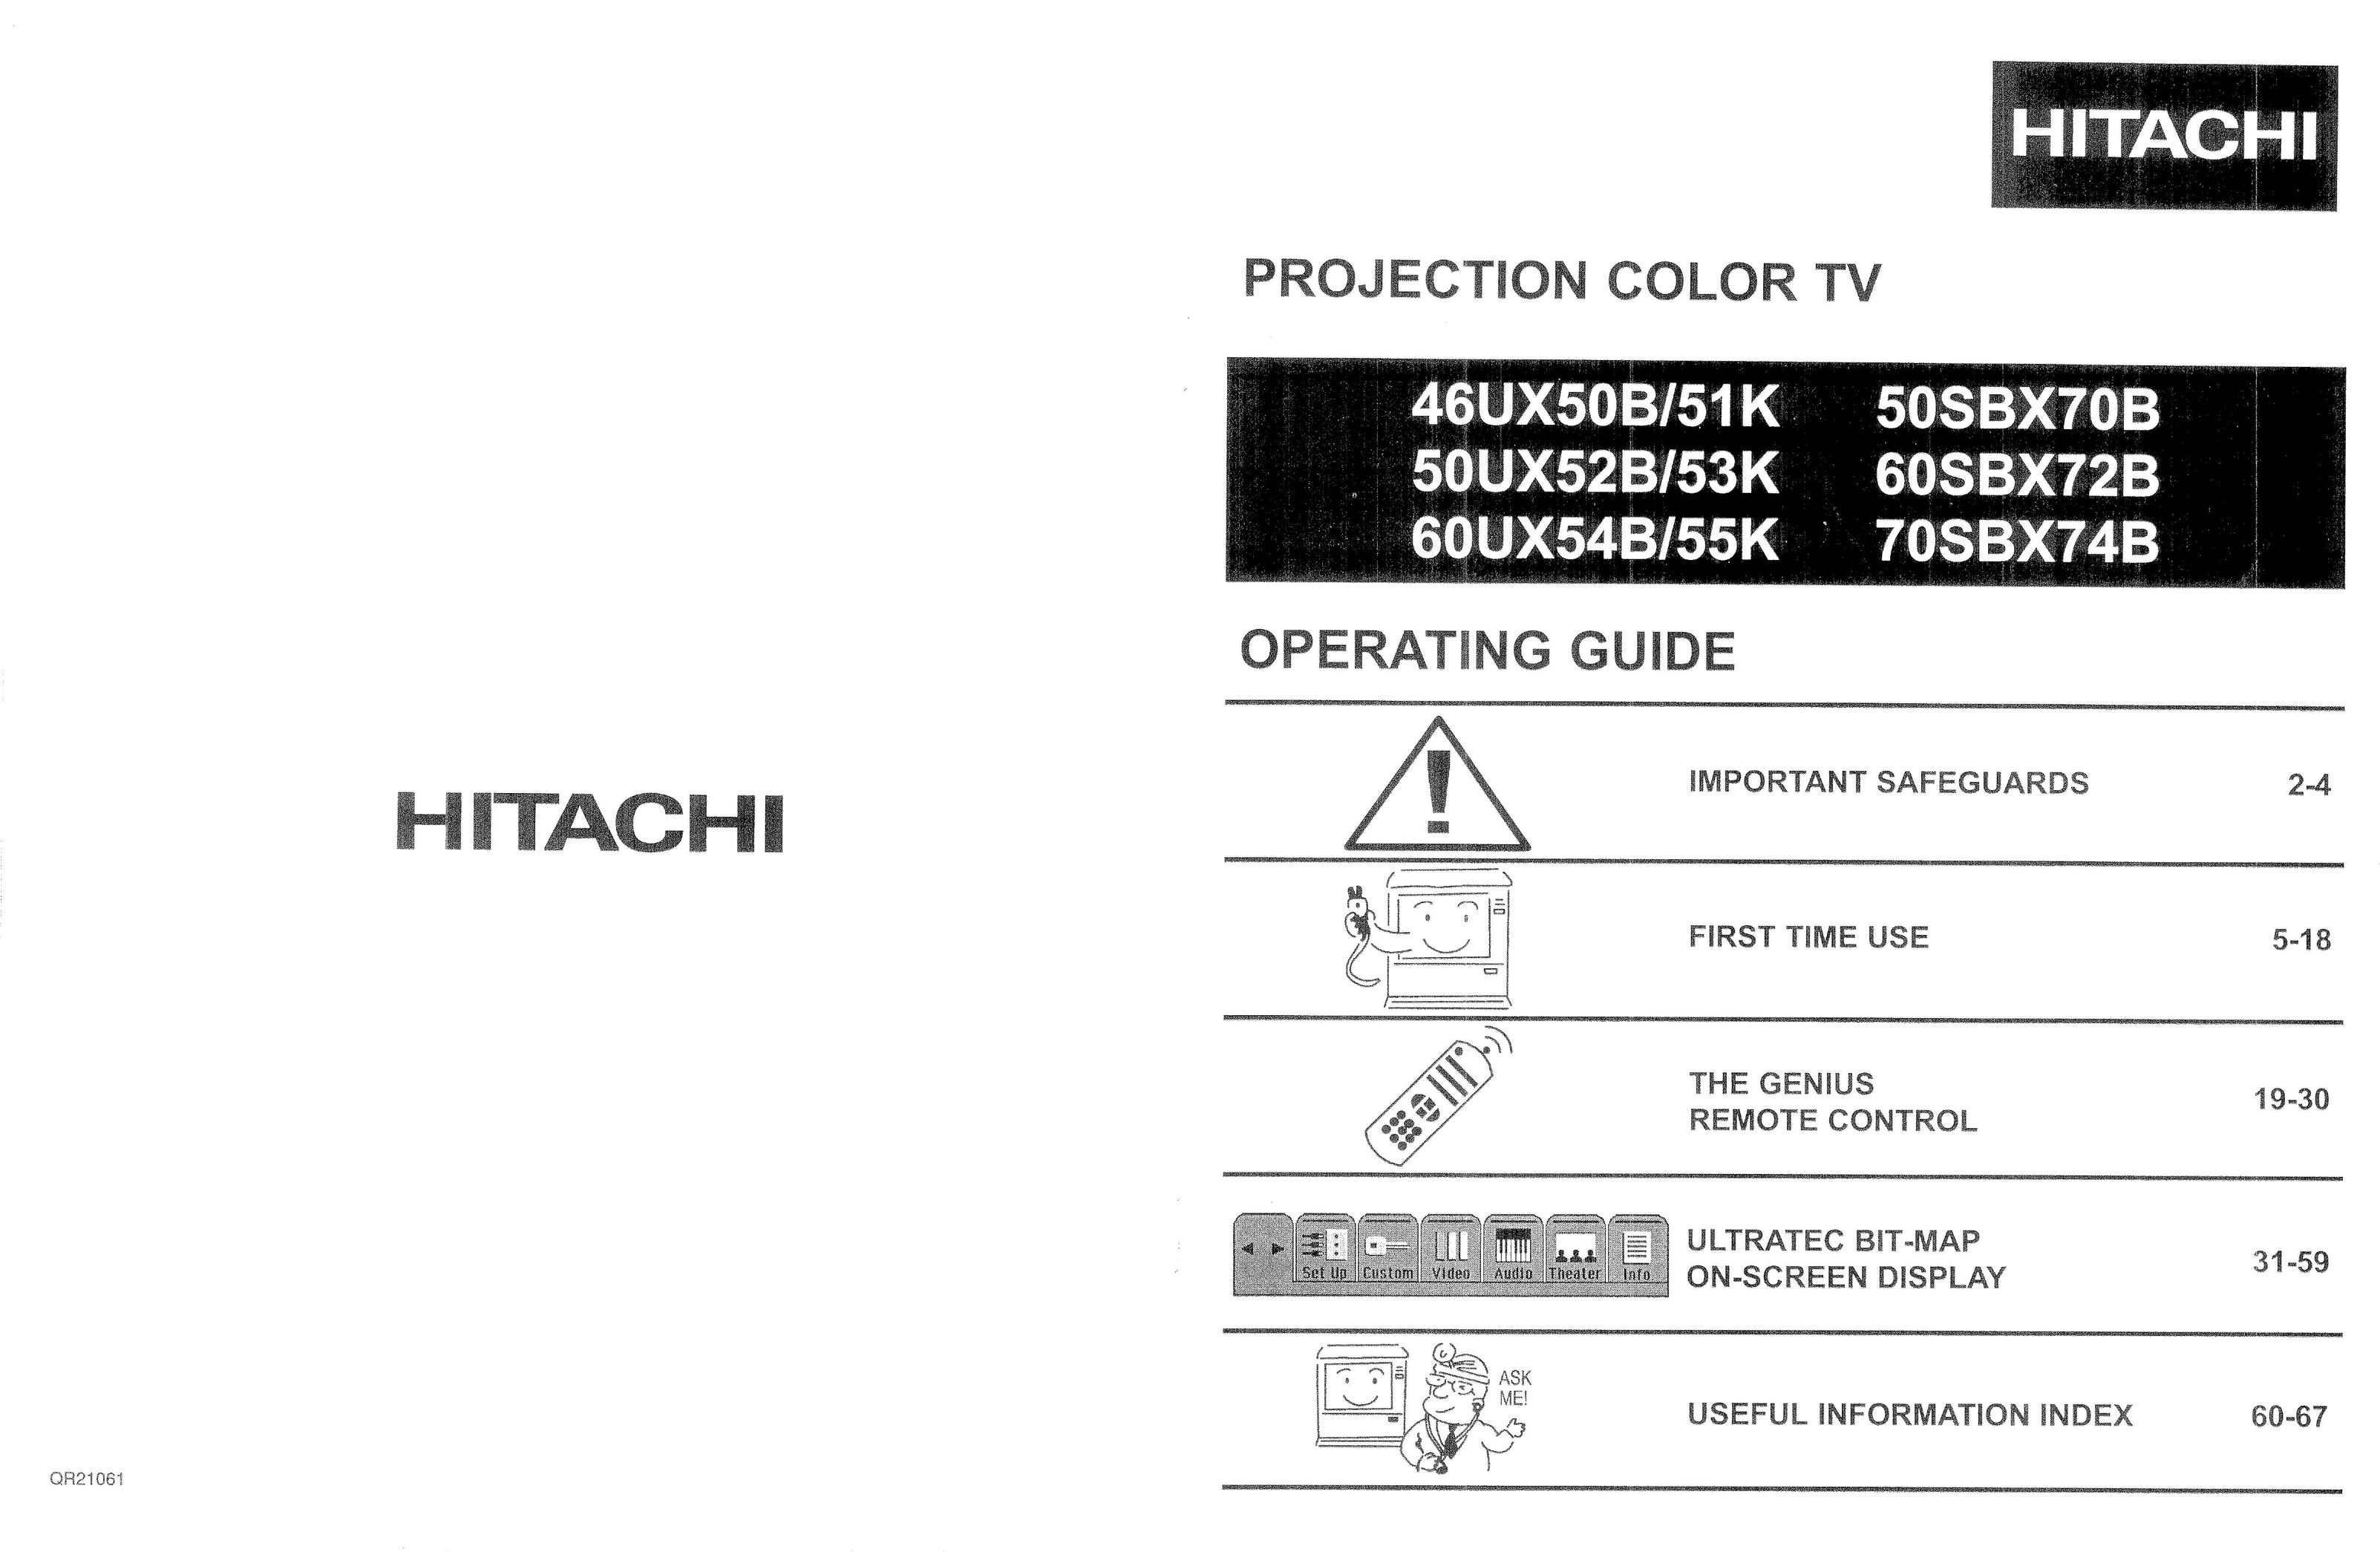 Hitachi 60SBX72B CRT Television User Manual